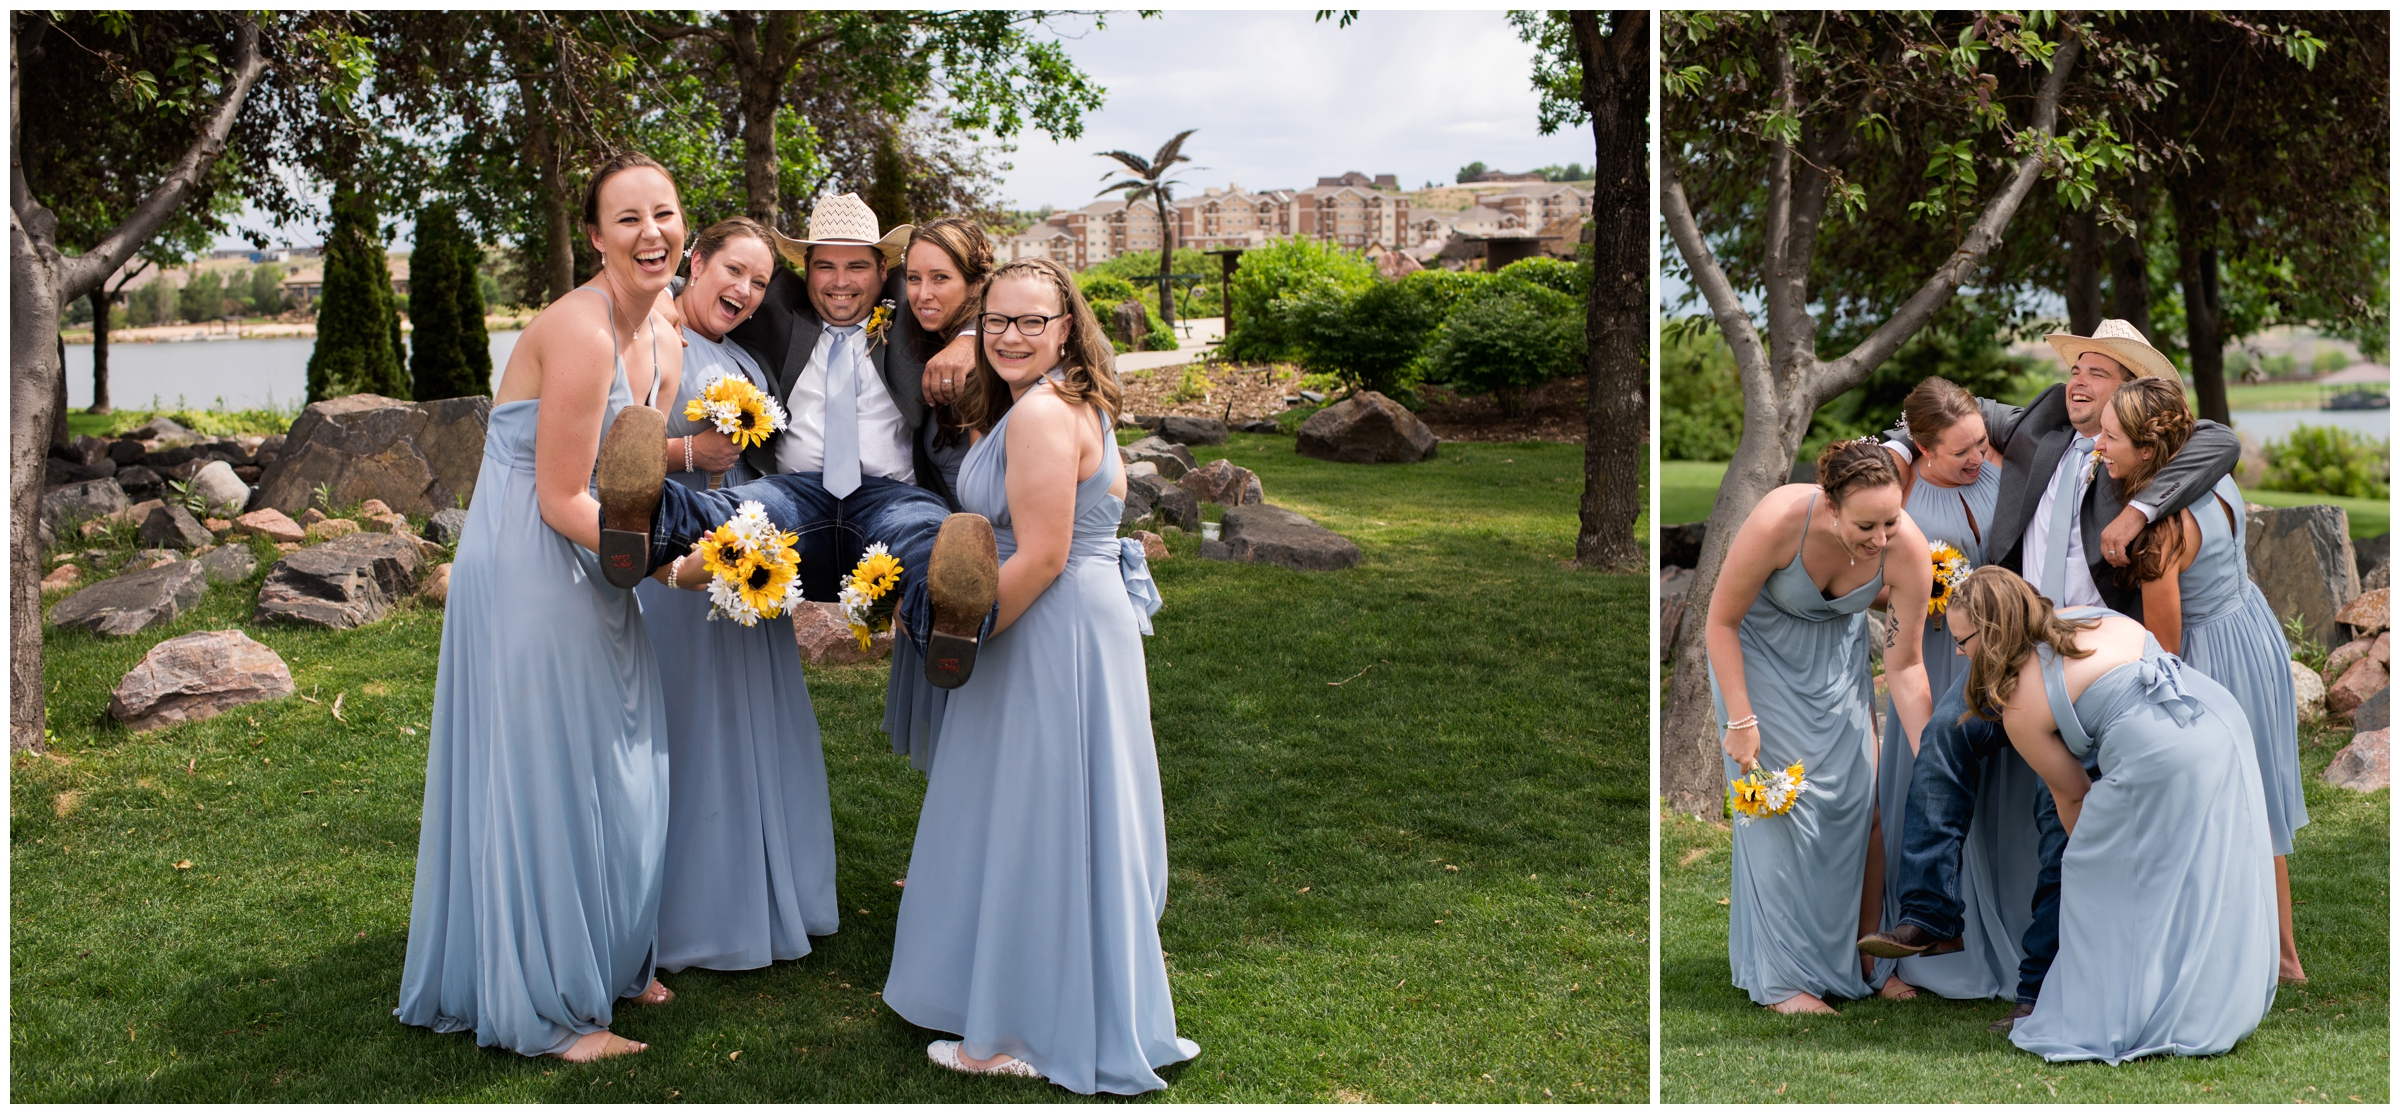 bridesmaids lifting groom at Pelican Lakes Golf Course wedding in Windsor Colorado 